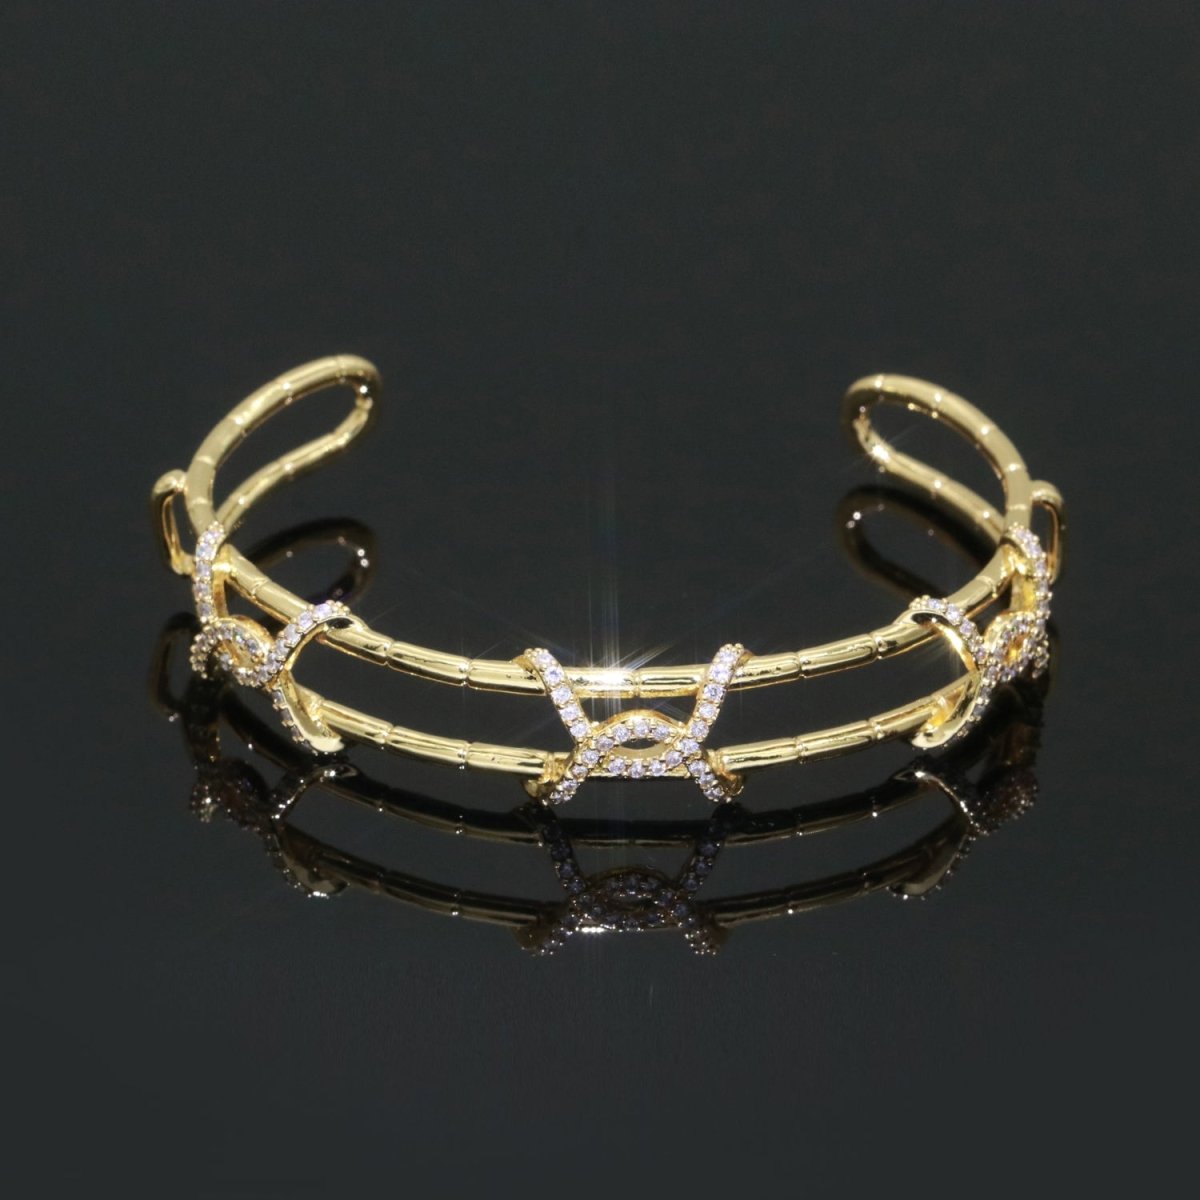 24K Shiny Gold Filled Adjustable Twisted Rope Bracelet, Twisted Bracelet, Open Cuff Rope Bangle, Stacking Bracelet | WA-140 Clearance Pricing - DLUXCA